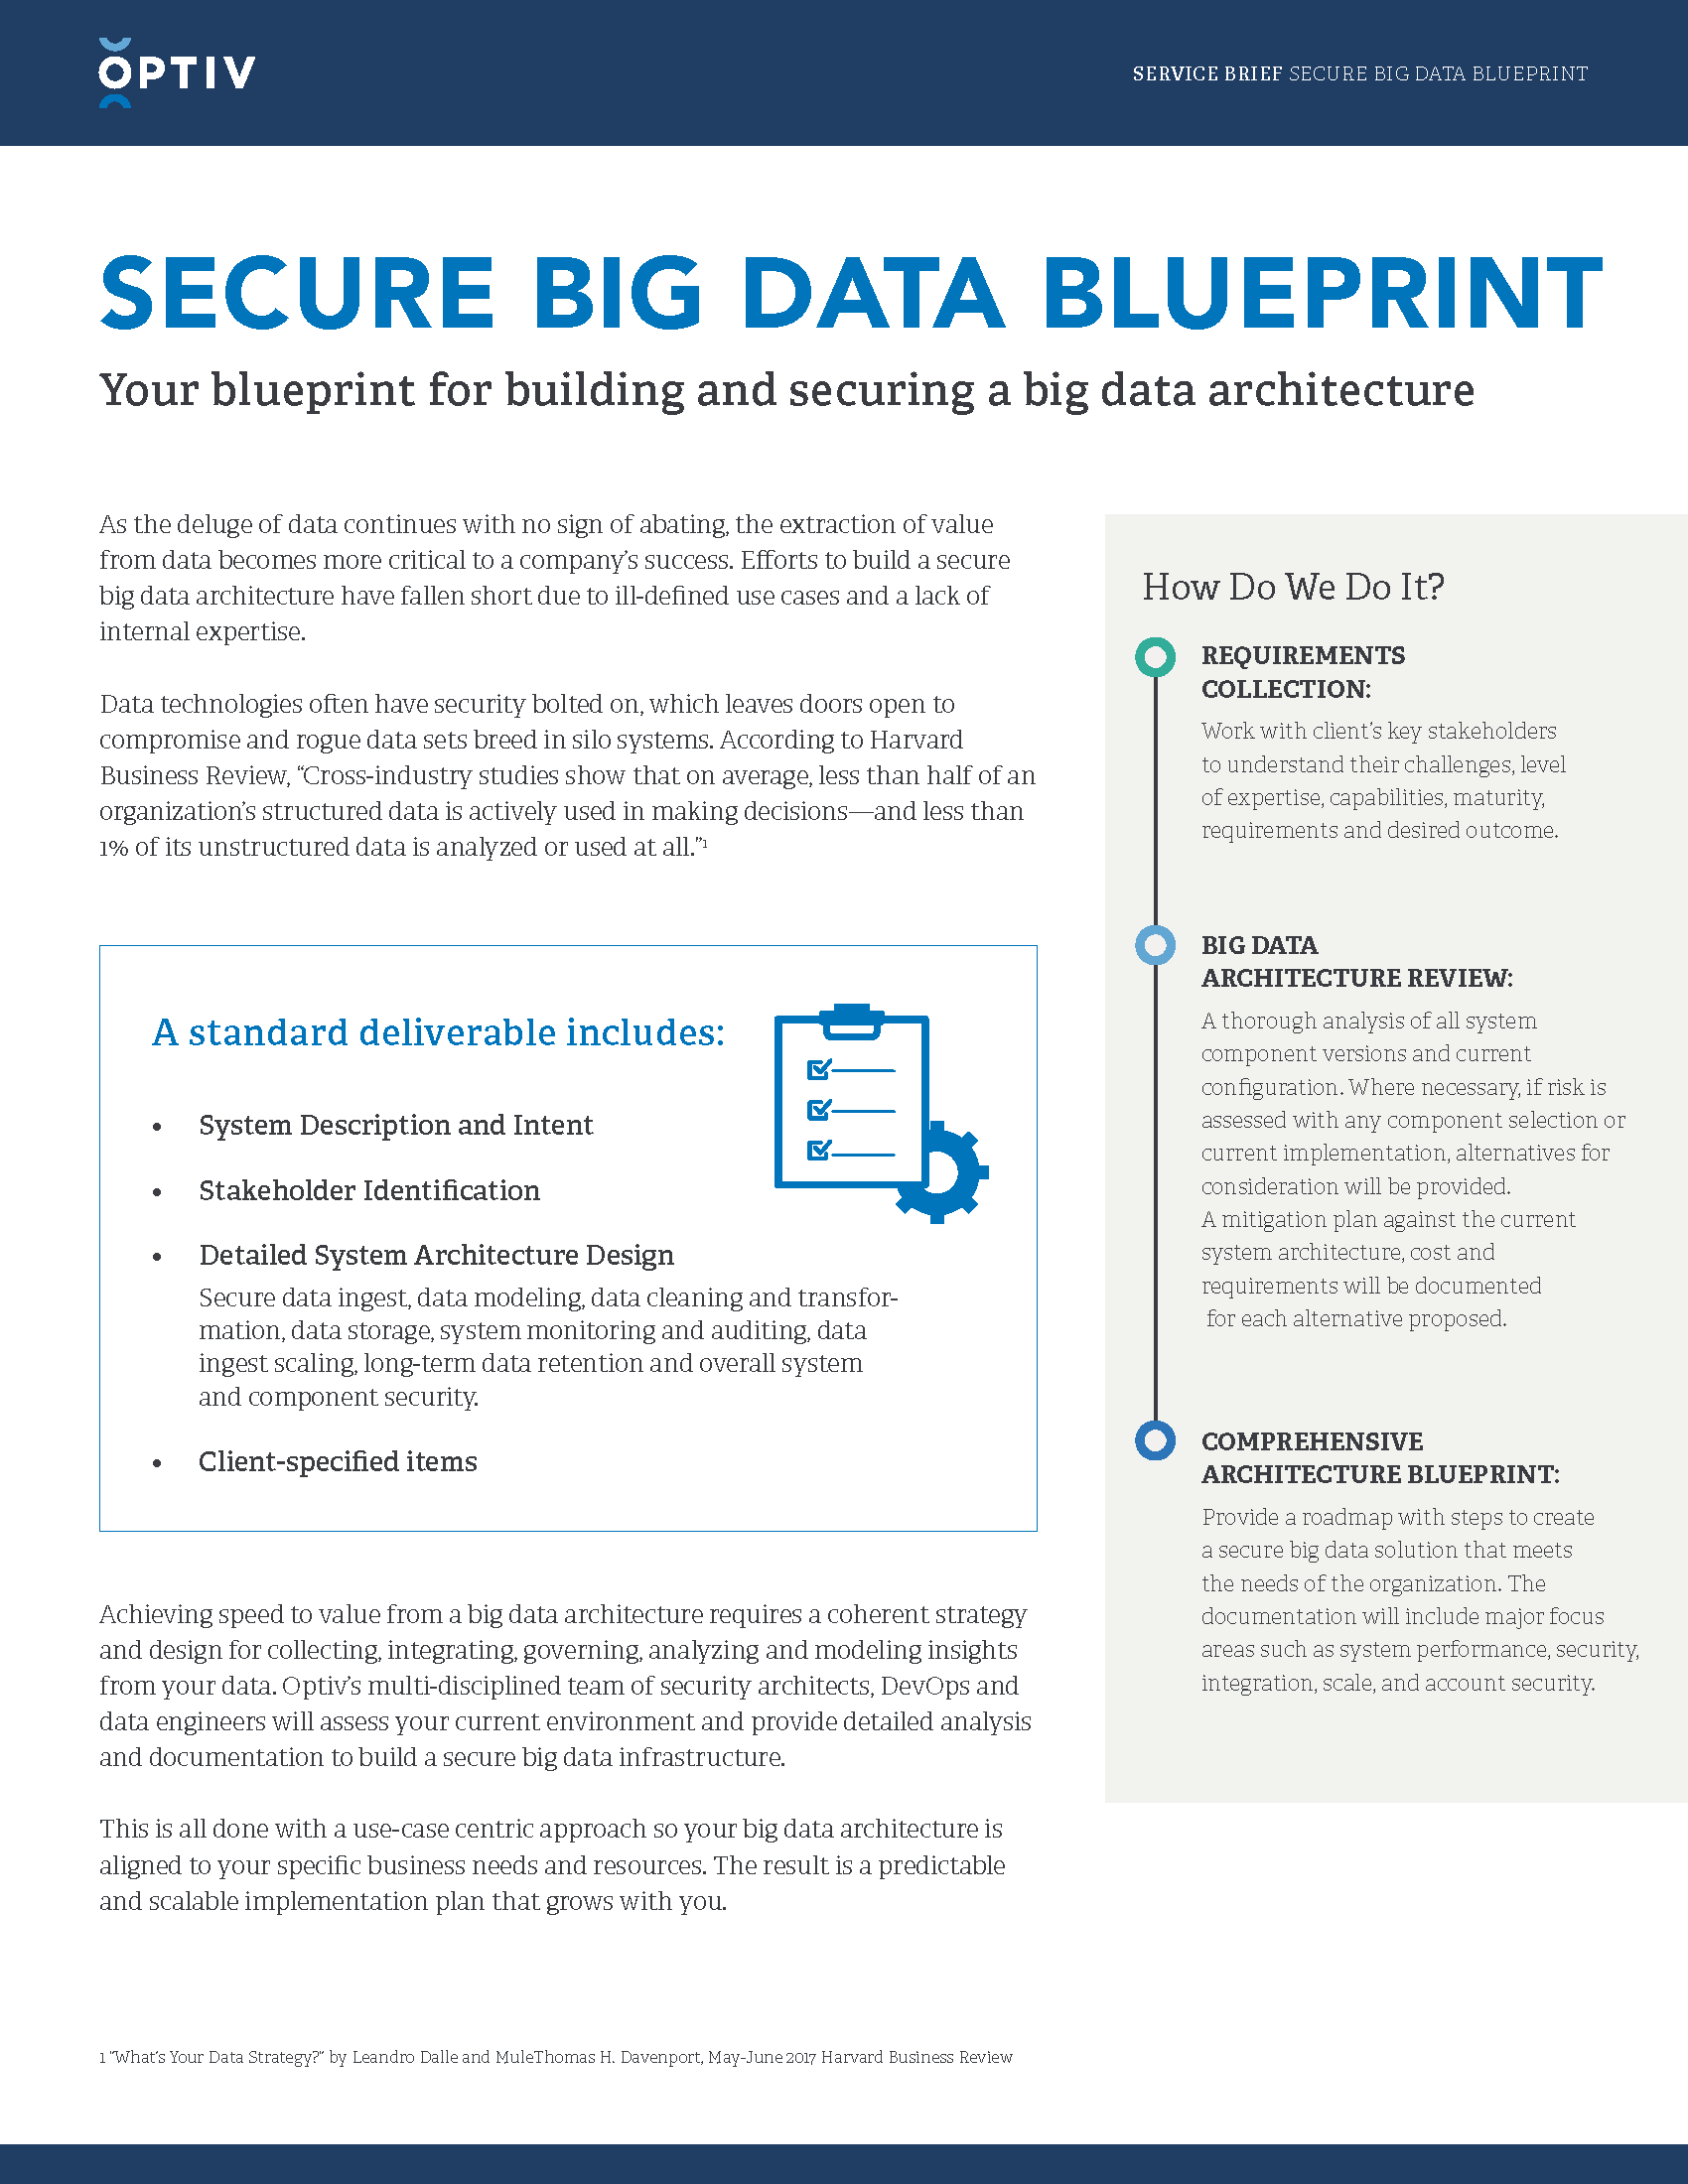 Secure Big Data Blueprint_Service Brief_Page_1